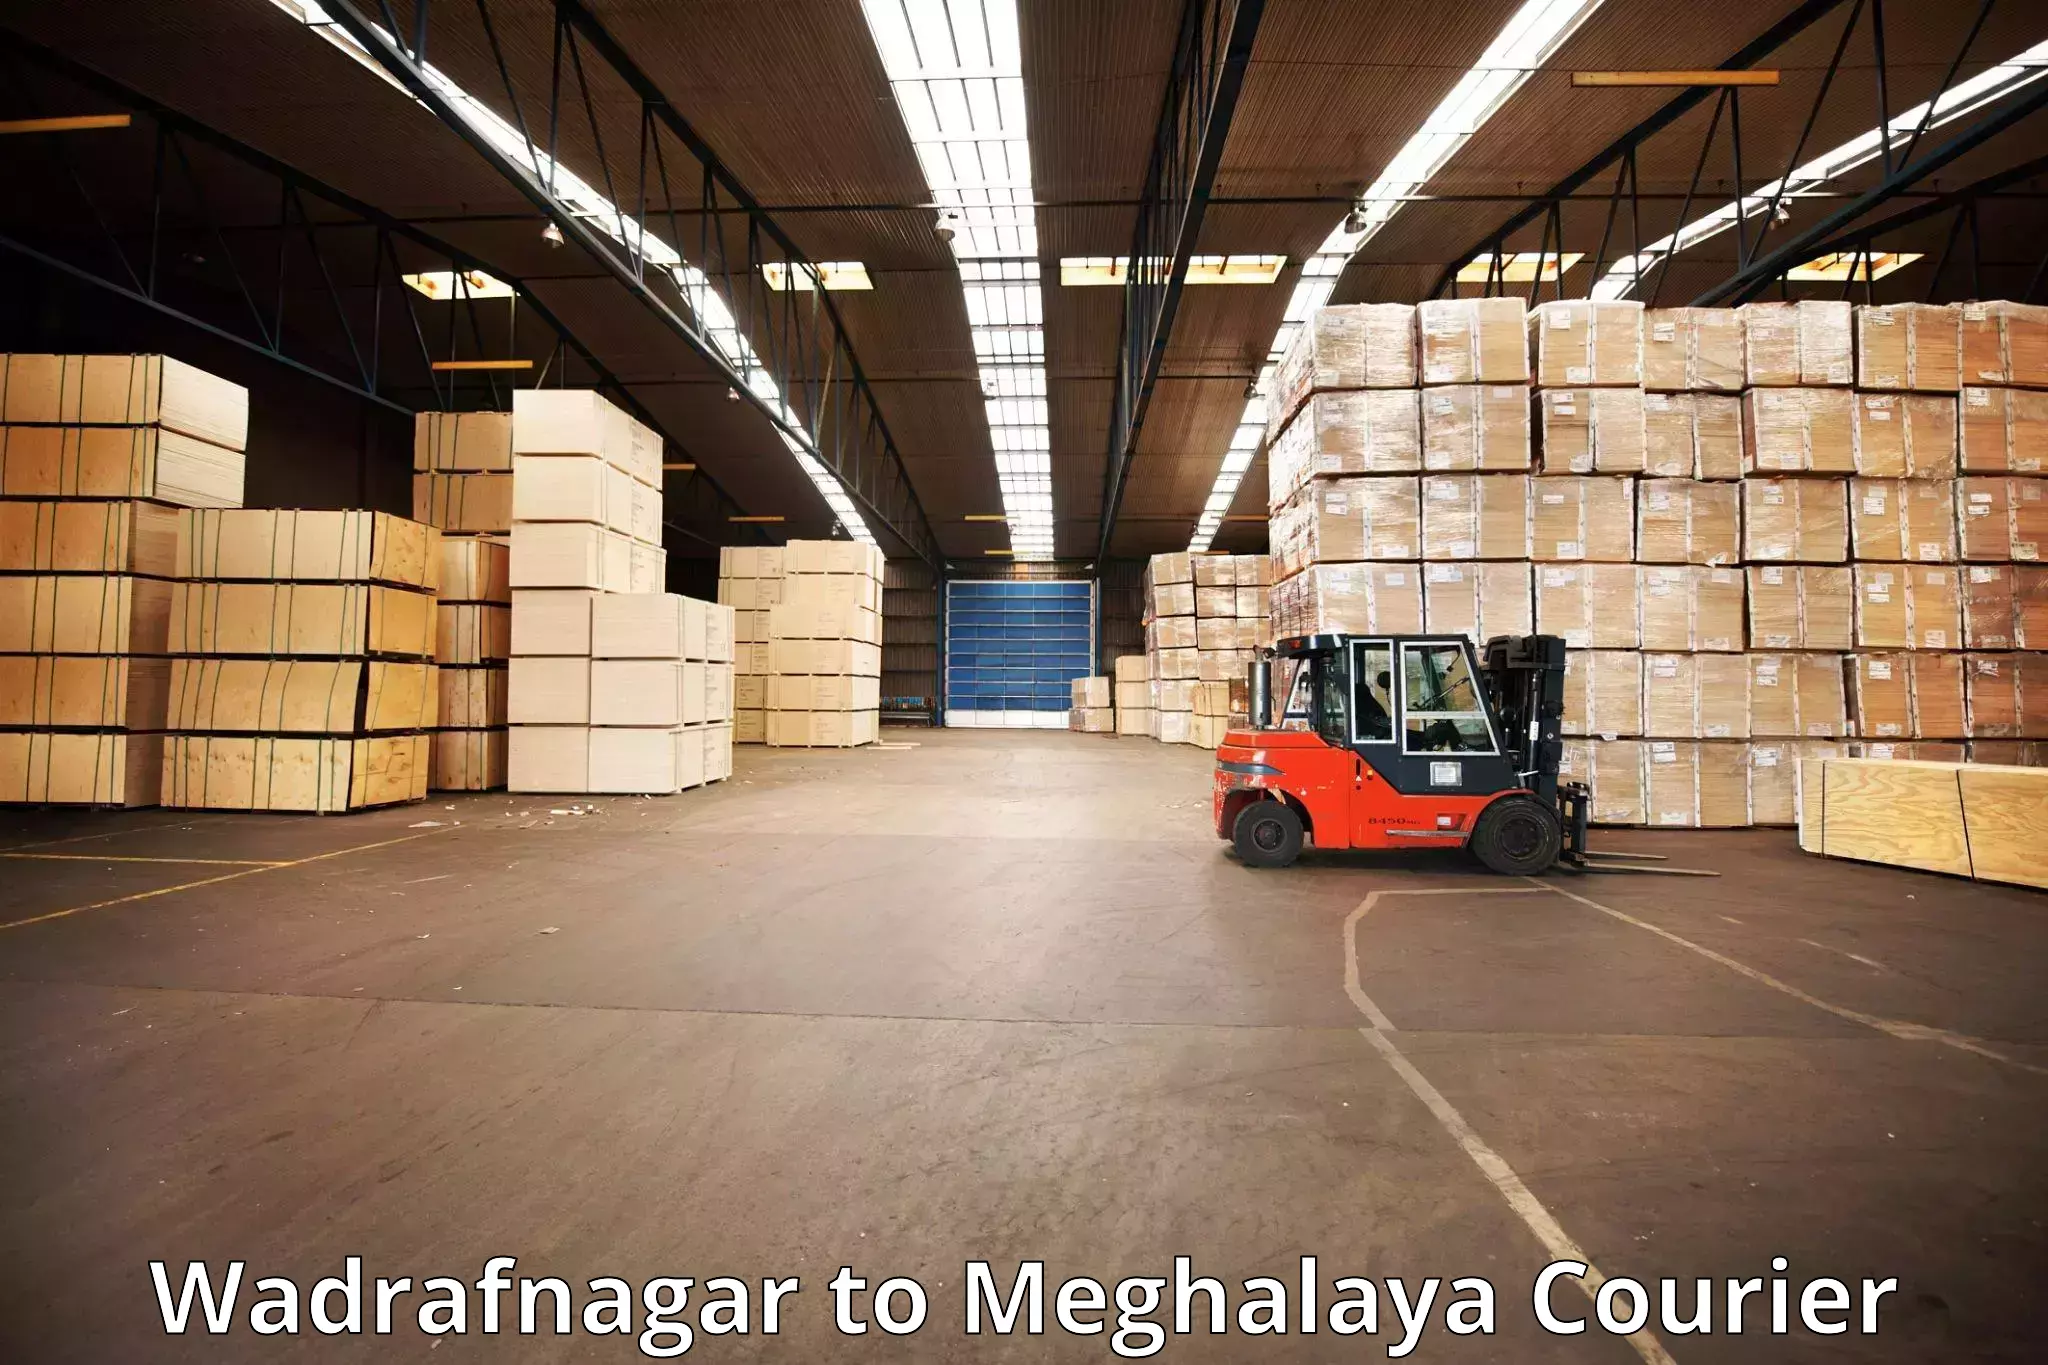 Baggage shipping experts Wadrafnagar to Meghalaya